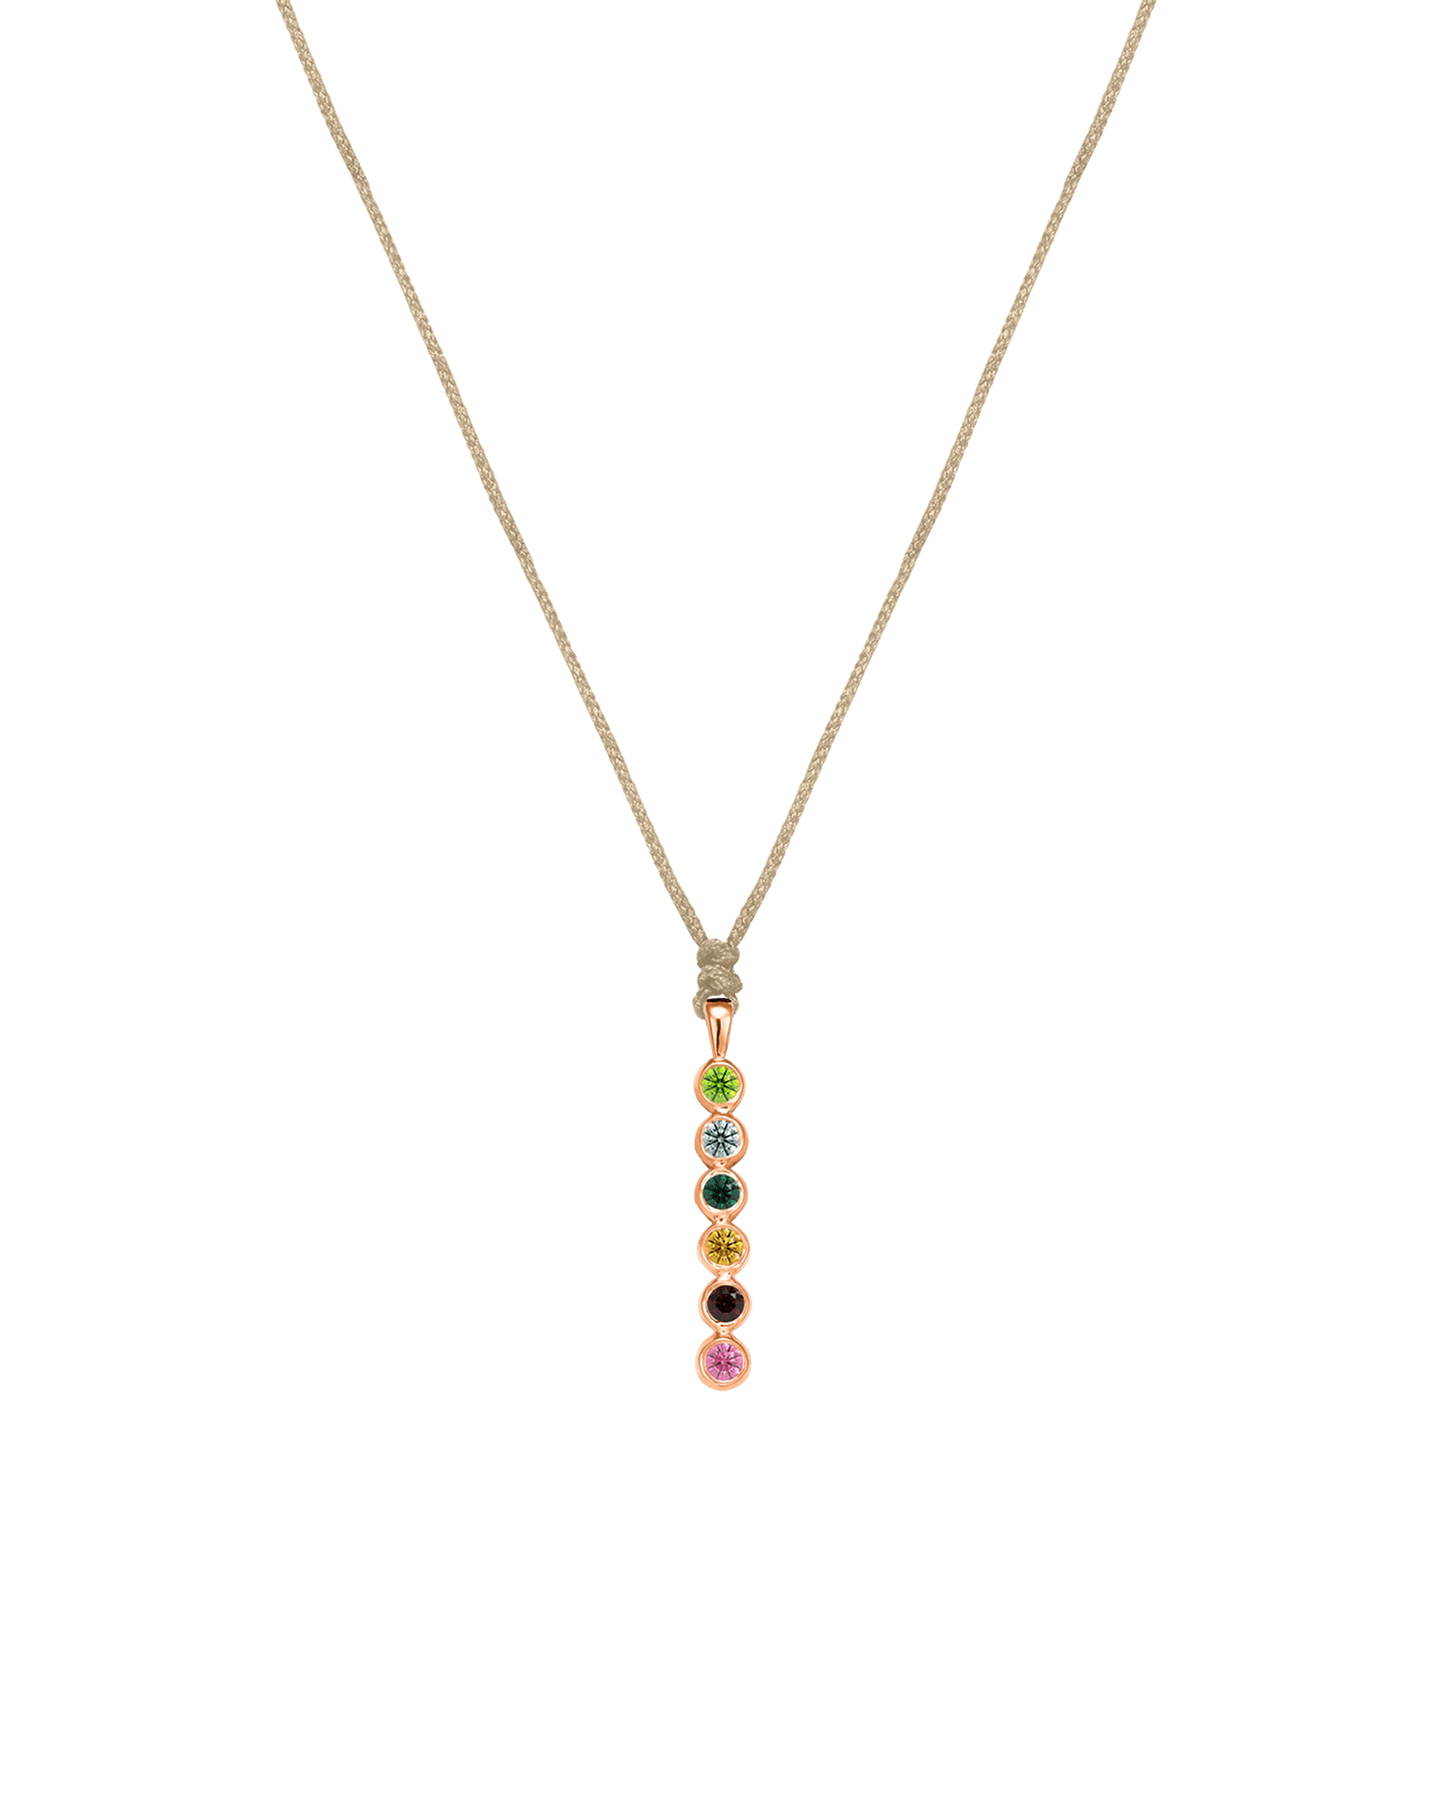 The Birthstones Bar Necklace - 14K Rose Gold Necklaces 14K Solid Gold Sand 2 